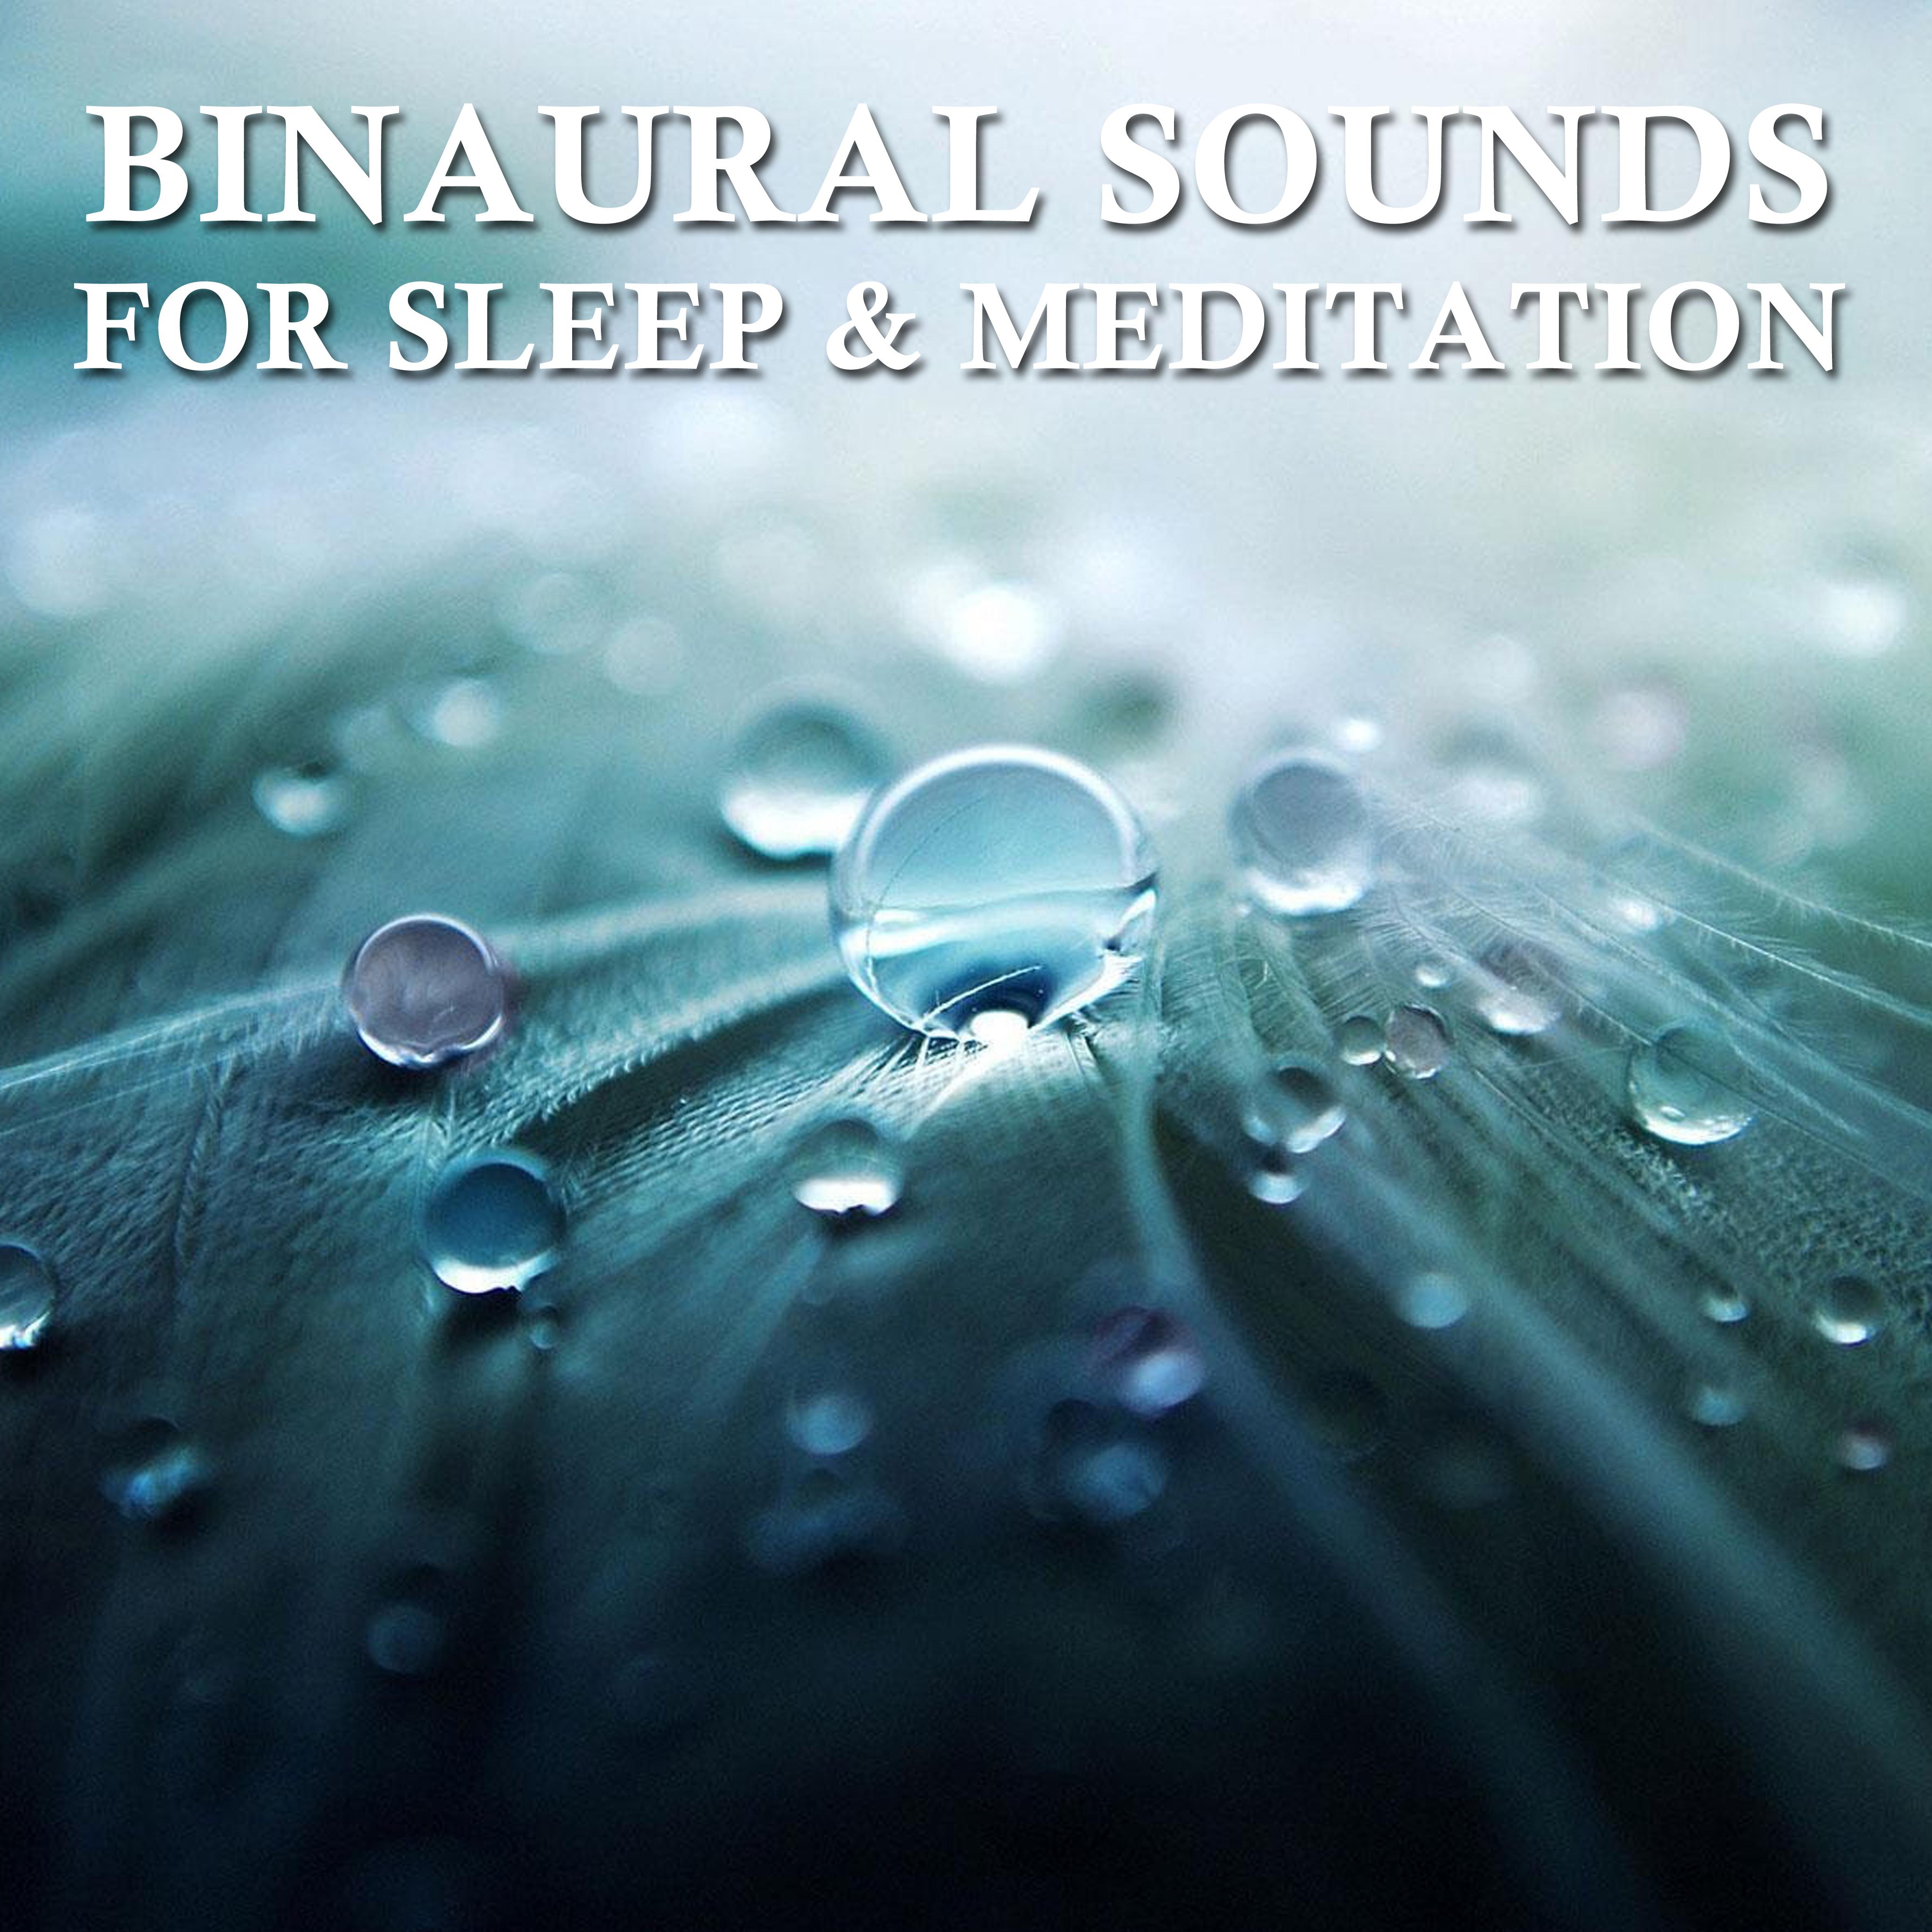 12 Binaural Sounds for Sleep & Meditation